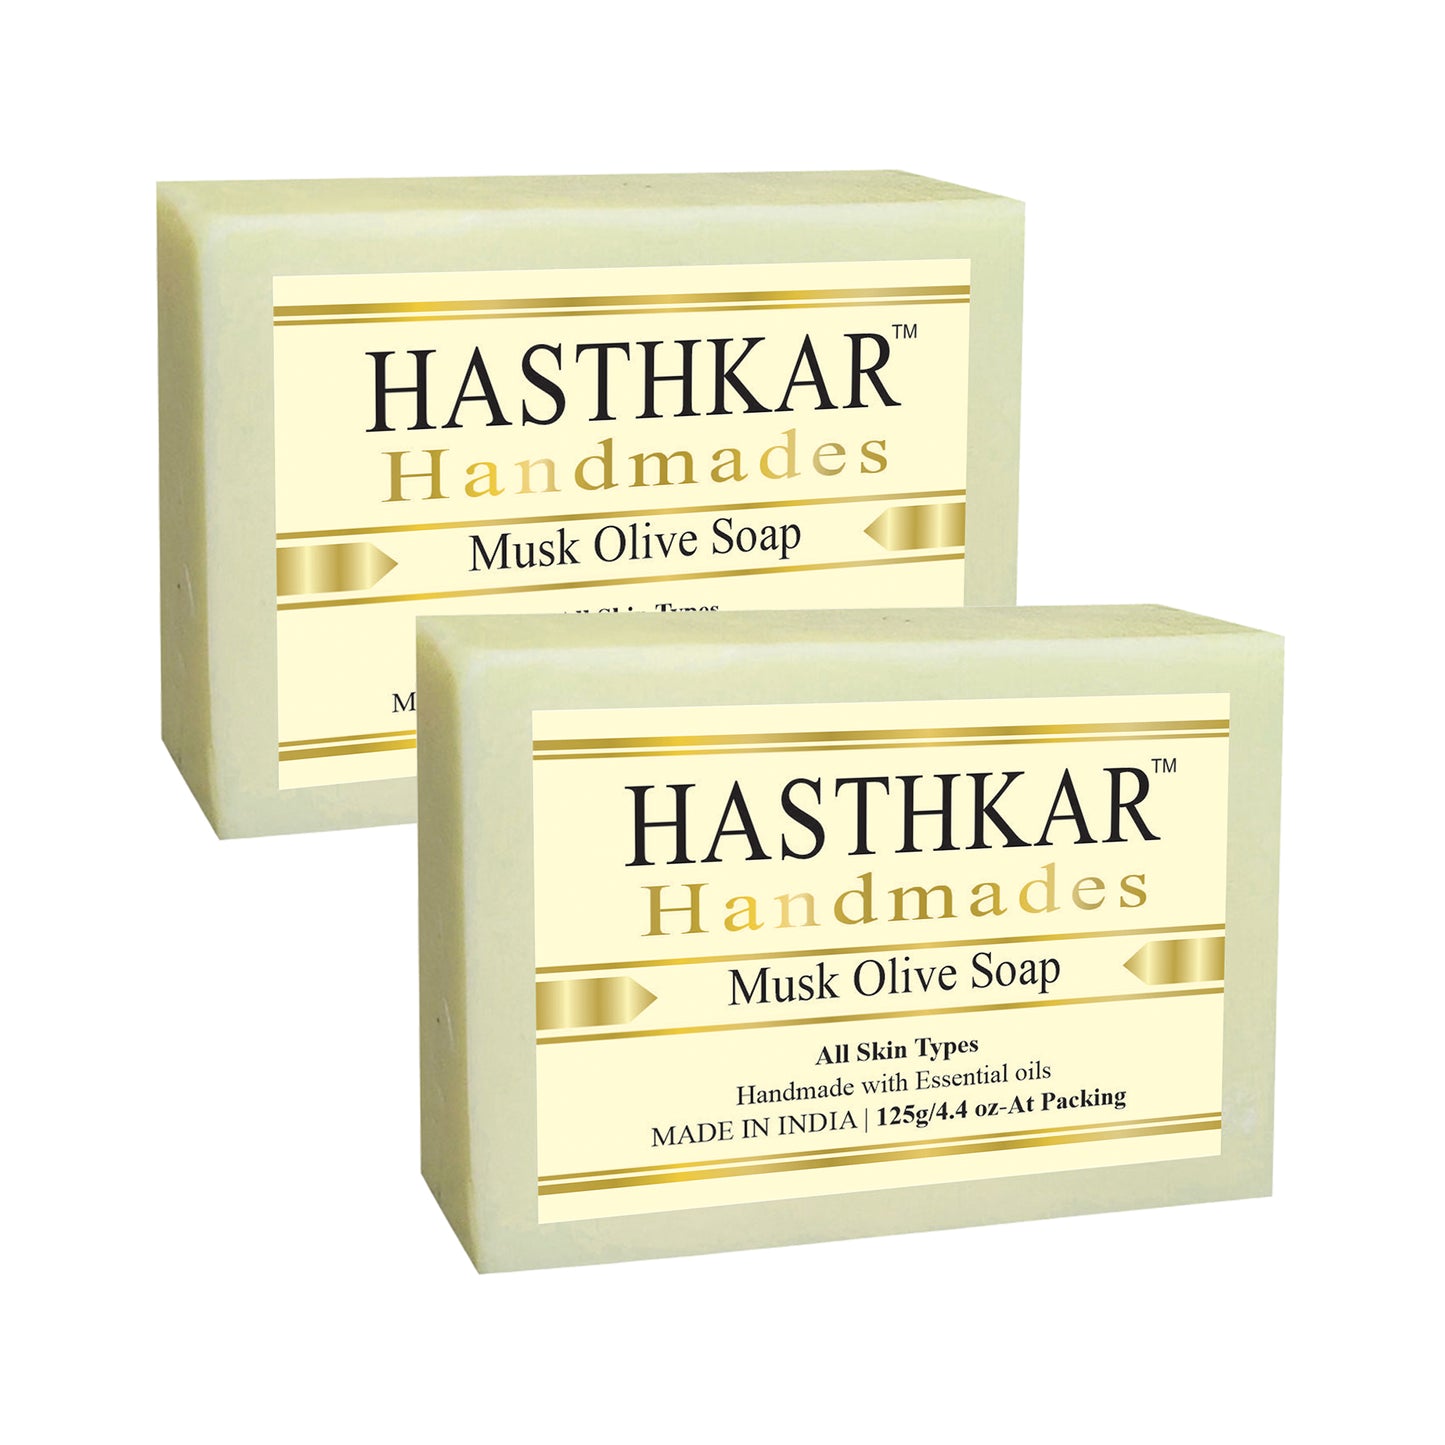 Hasthkar Handmades Glycerine Musk olive Soap 125gm Pack of 2